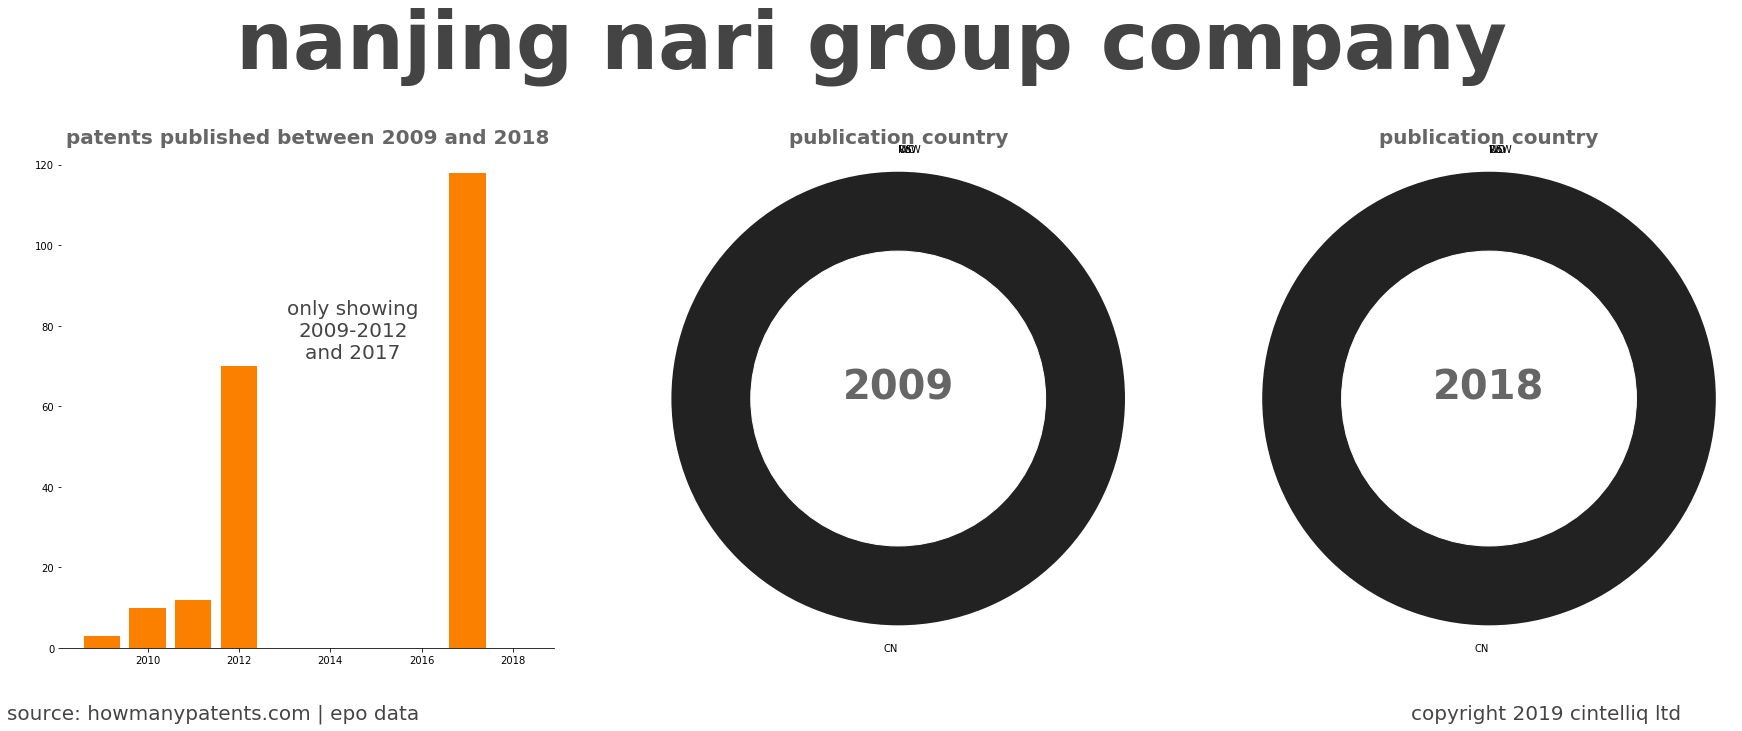 summary of patents for Nanjing Nari Group Company